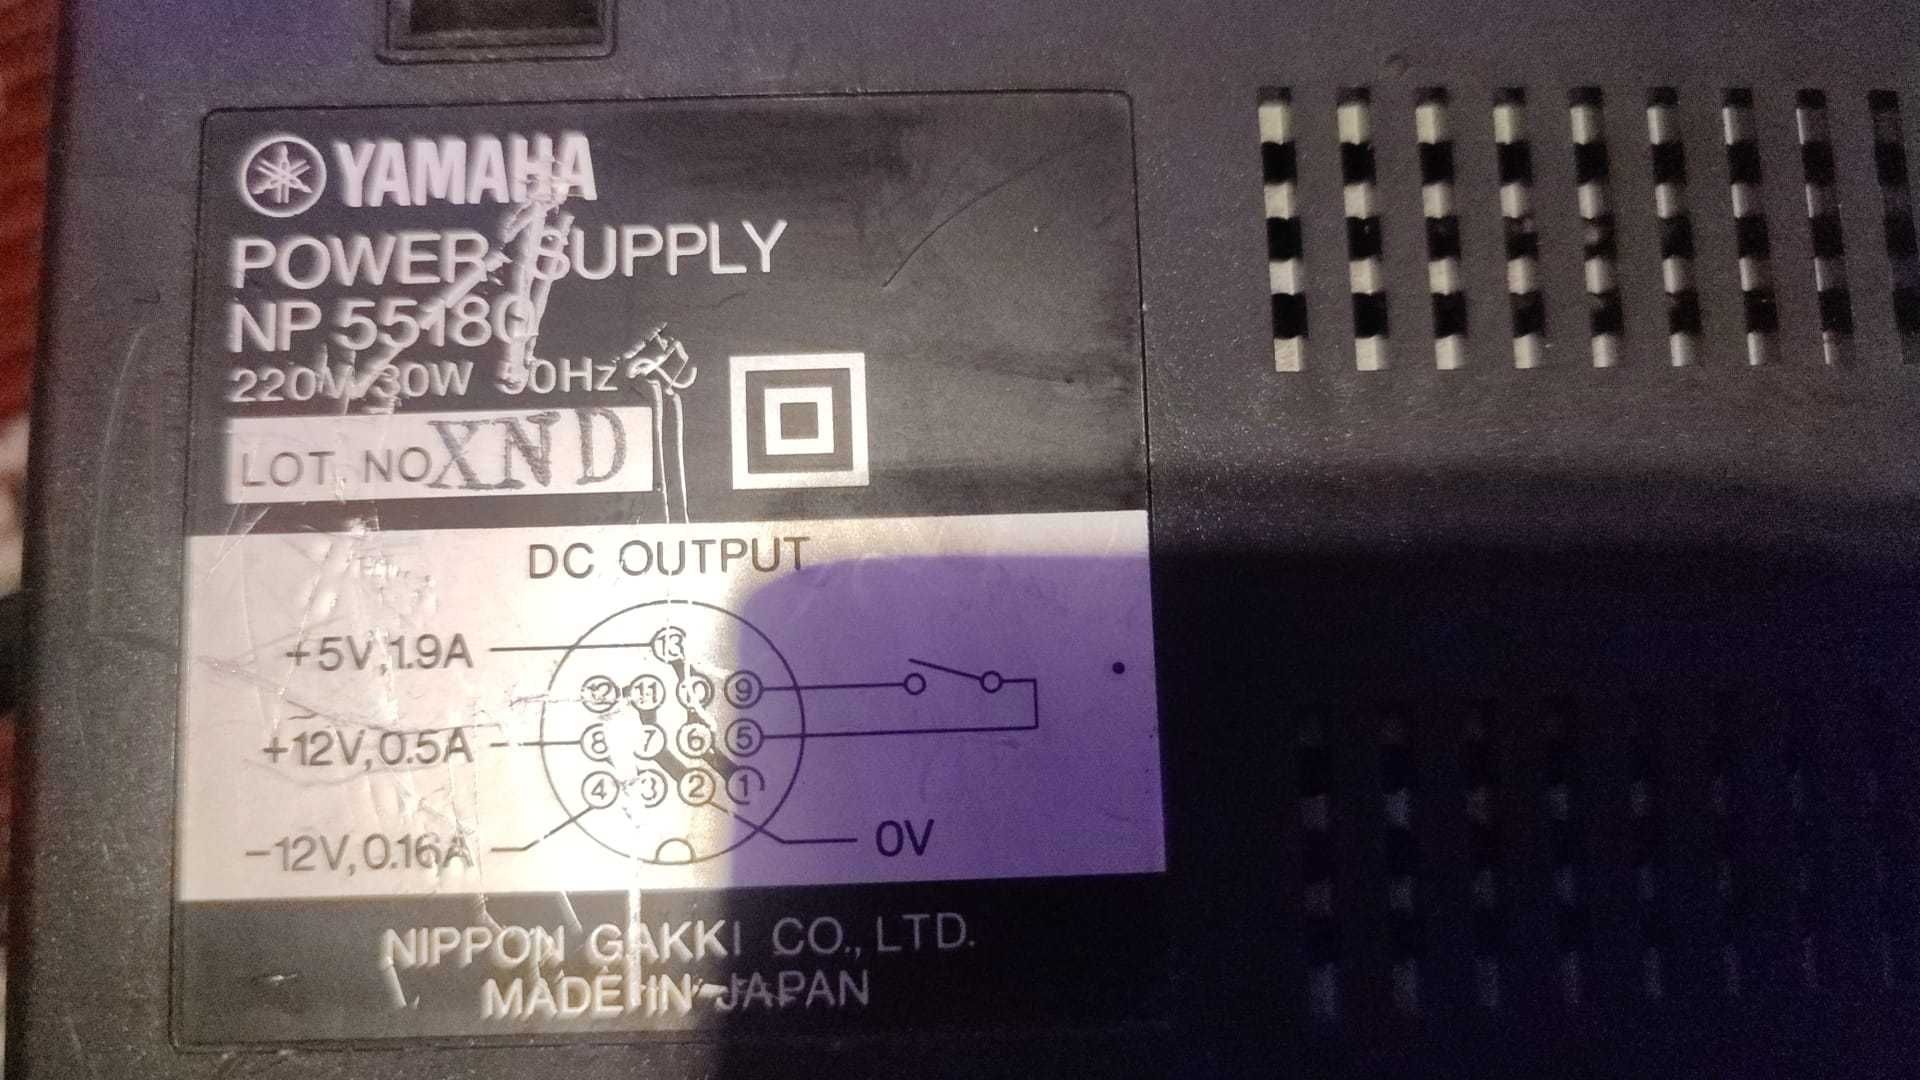 Alimentator orga Yamaha,calculator zx spectrum